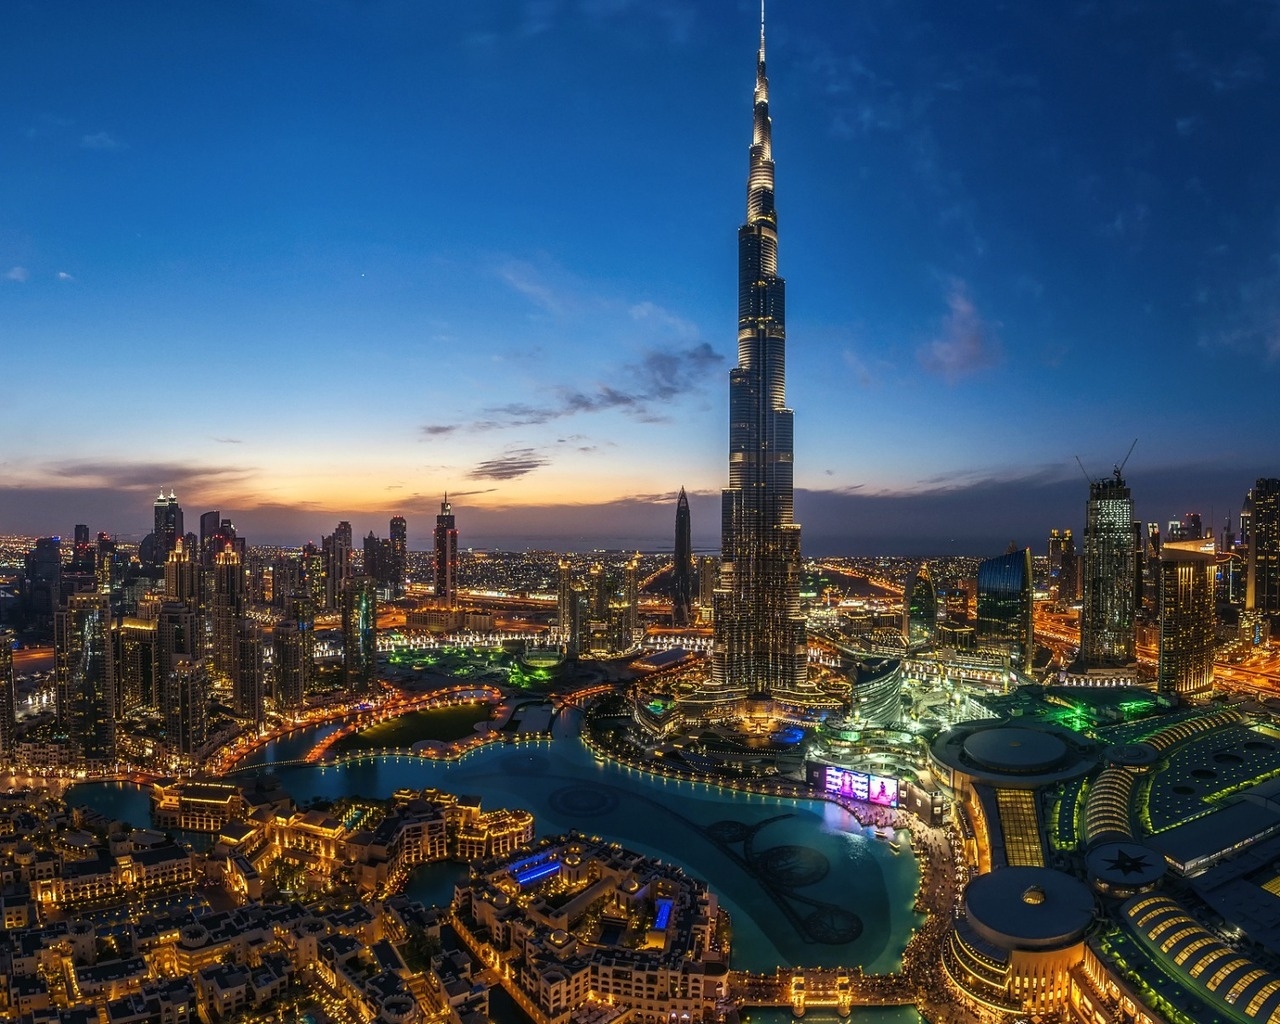 Night Lights in Dubai for 1280 x 1024 resolution